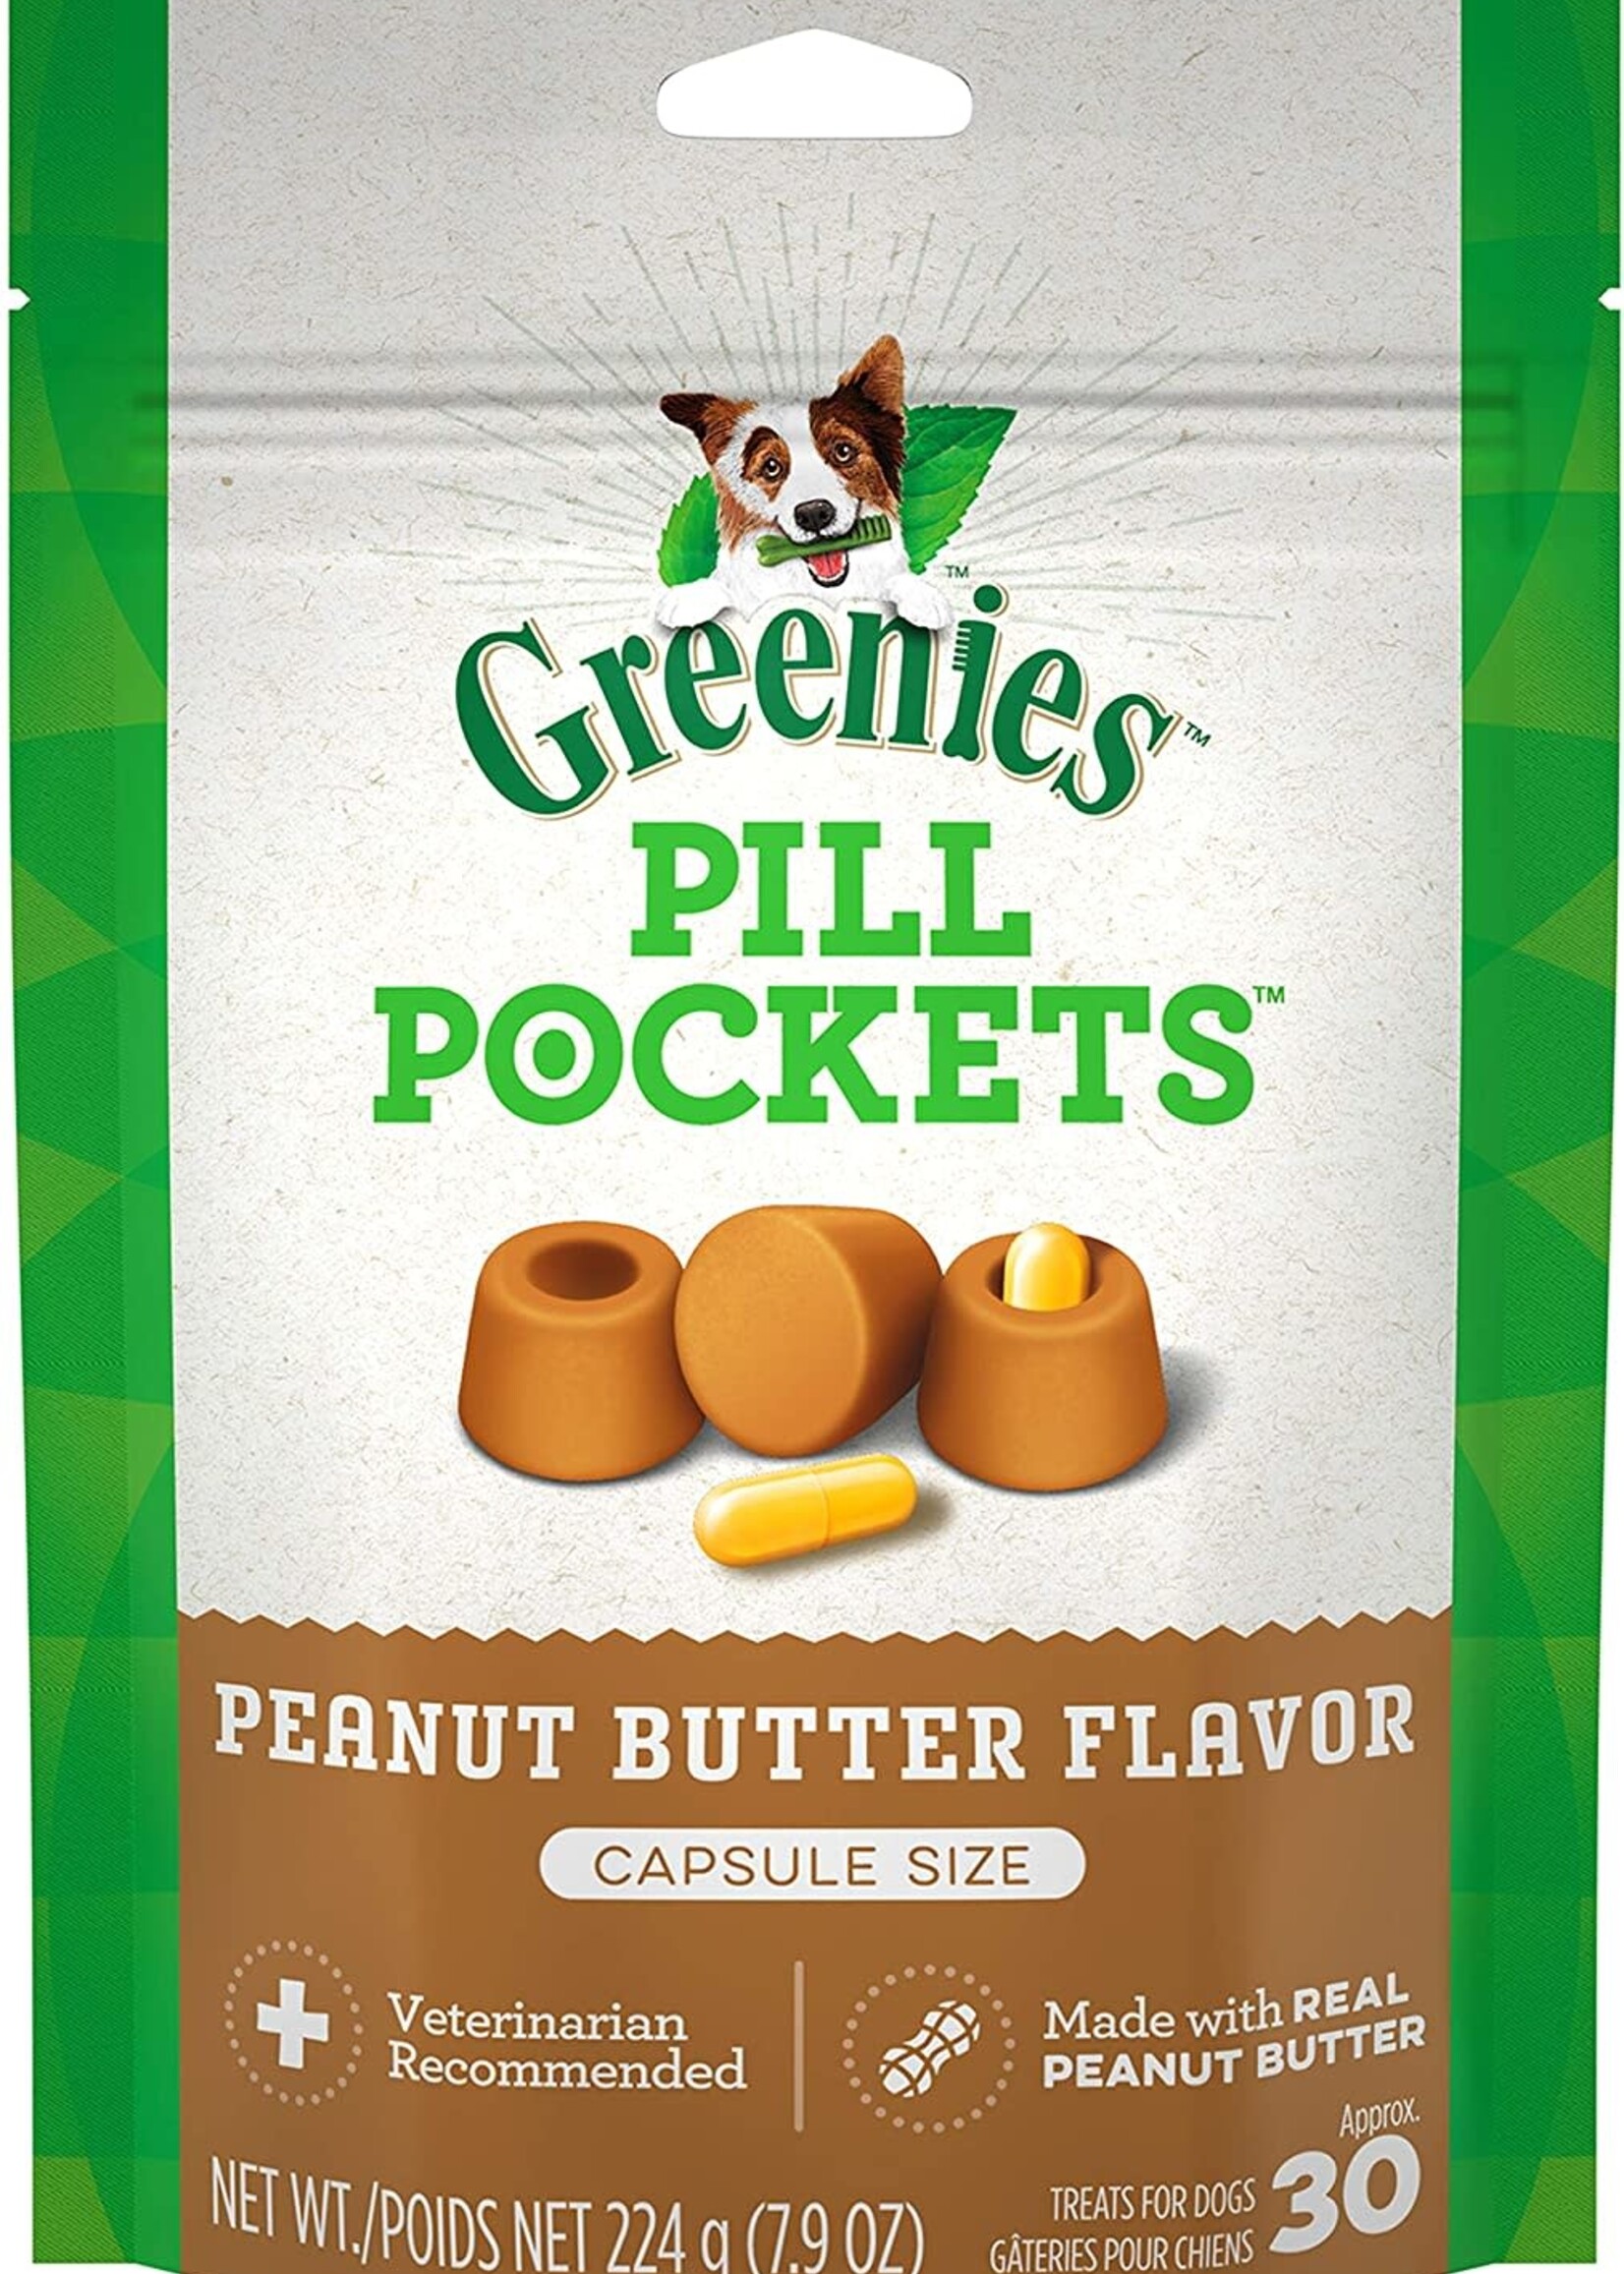 GREENIES GREENIES Pill Pockets Capsule Size Peanut Butter Flavor Dog Treats 7.9-oz